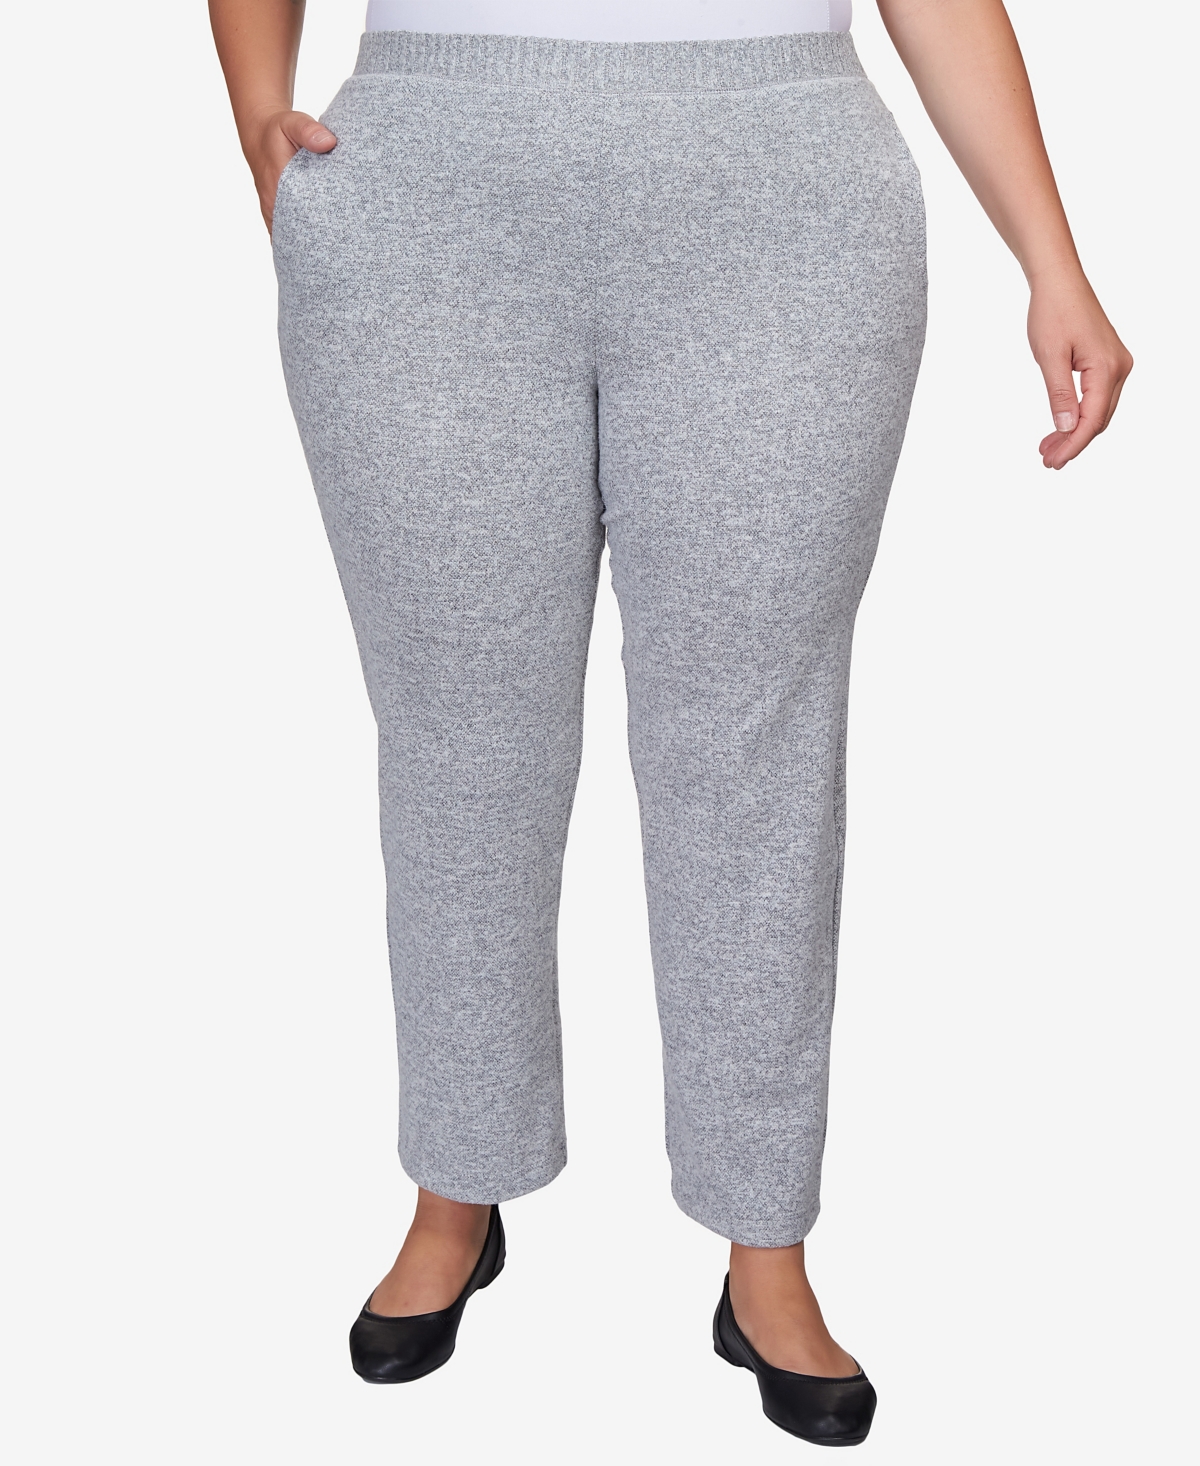 Plus Size Comfort Zone Comfort Fit Knit Average Length Pants - Gray